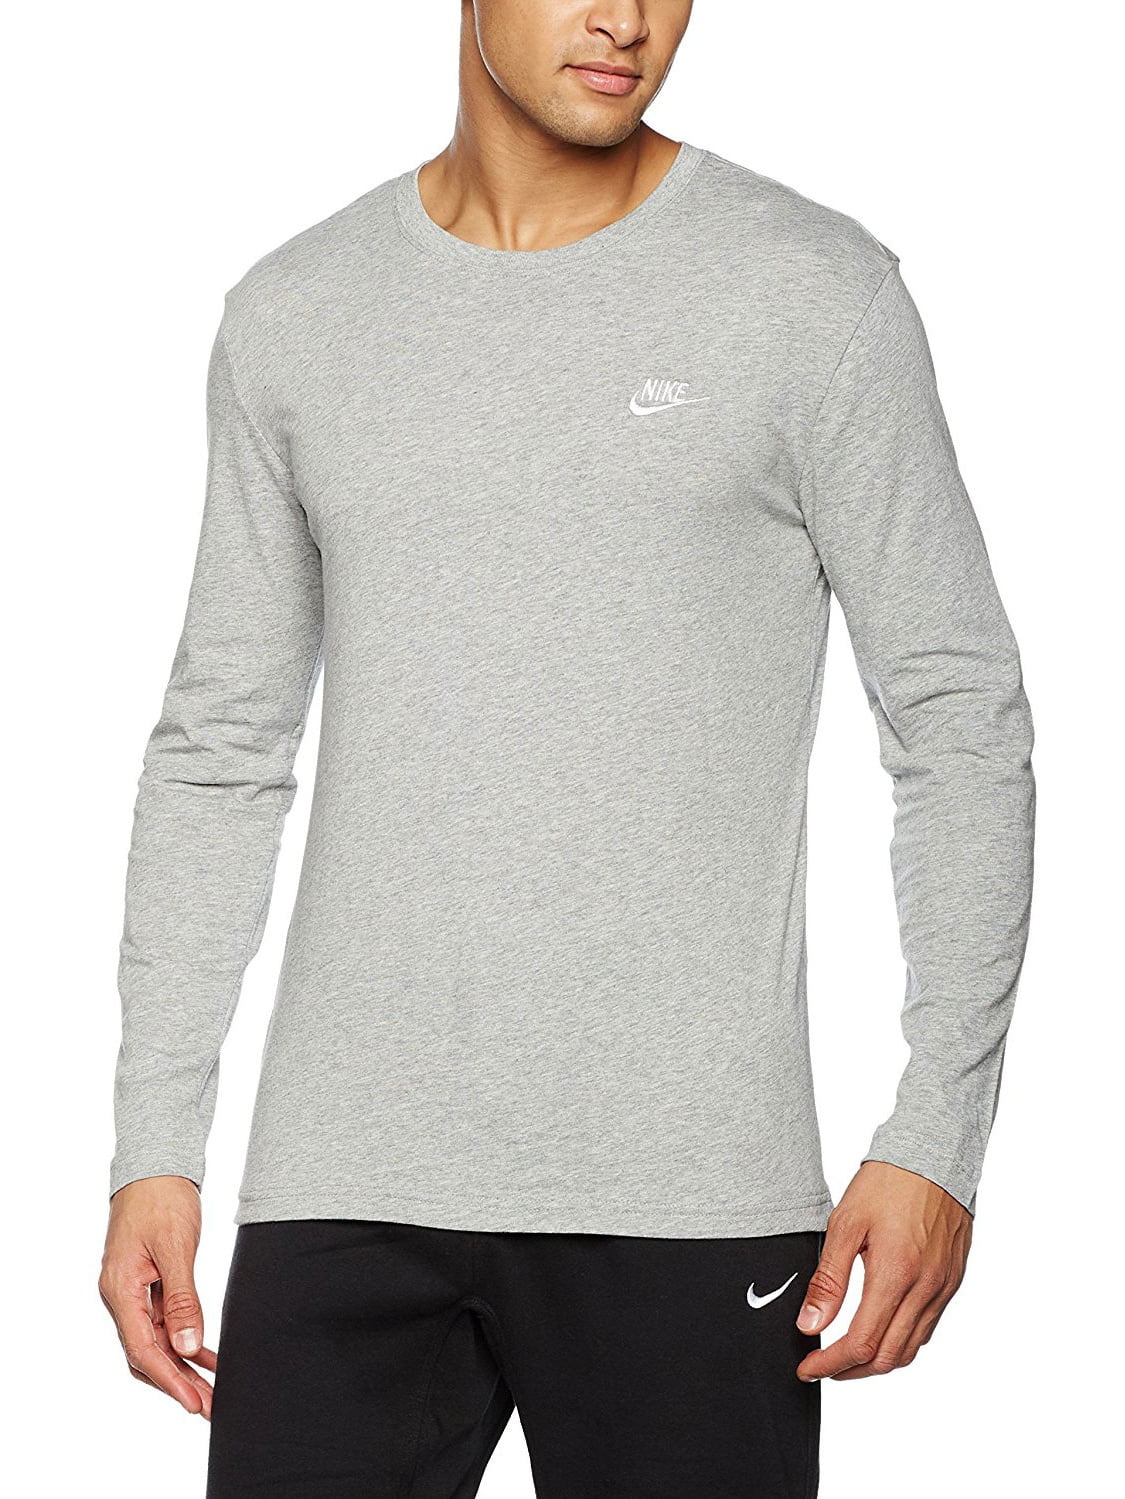 Nike Swoosh Logo Longsleeve Men's T-Shirt Grey/White 804413-063 ...